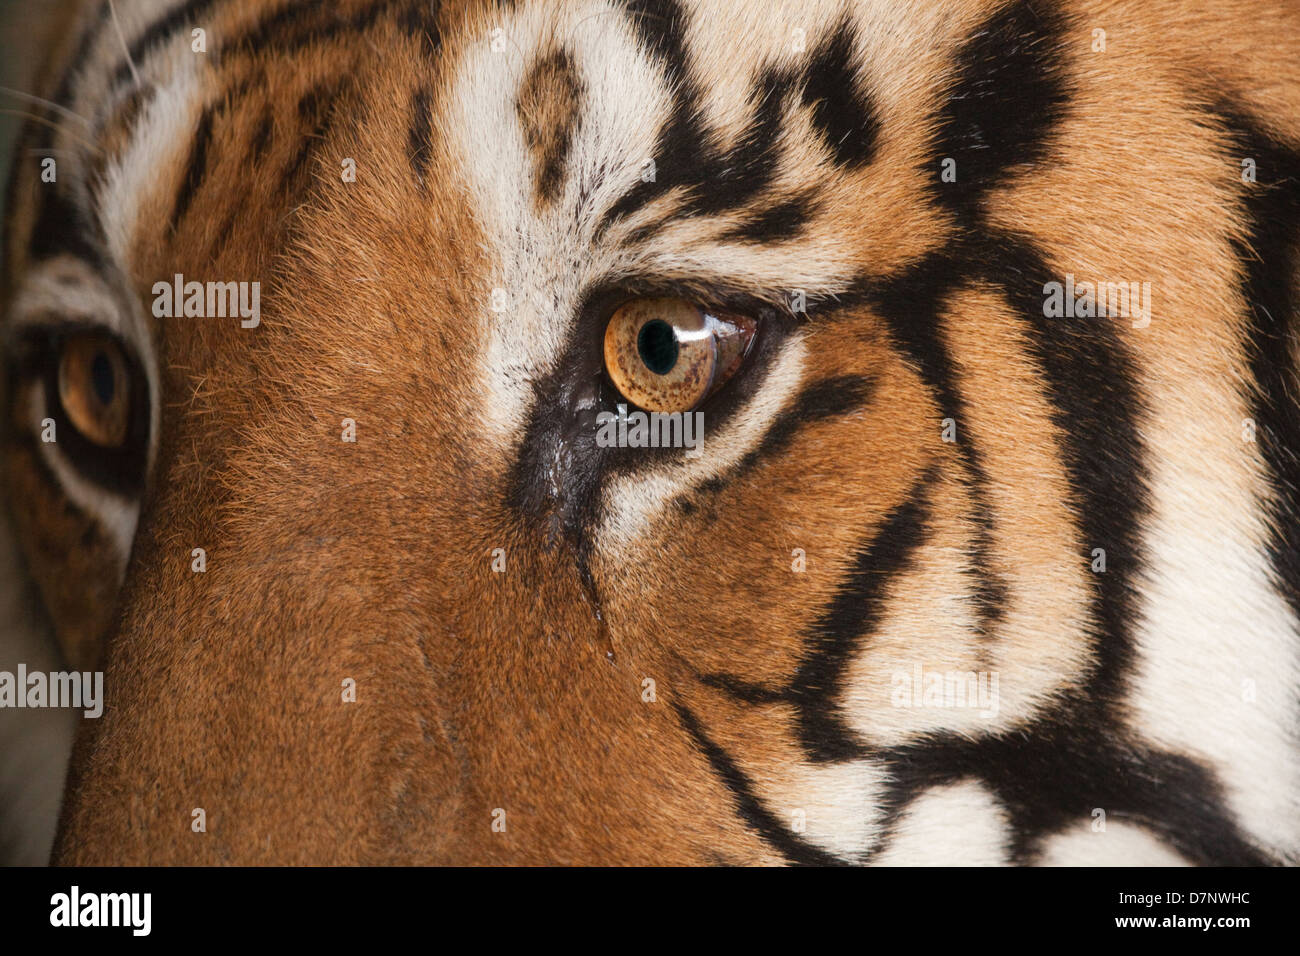 Royal Bengal Tiger (Panthera Tigris Tigris). Close-up Kopf Details. Linkes Auge und den umliegenden Gesicht Markierungen. Stockfoto